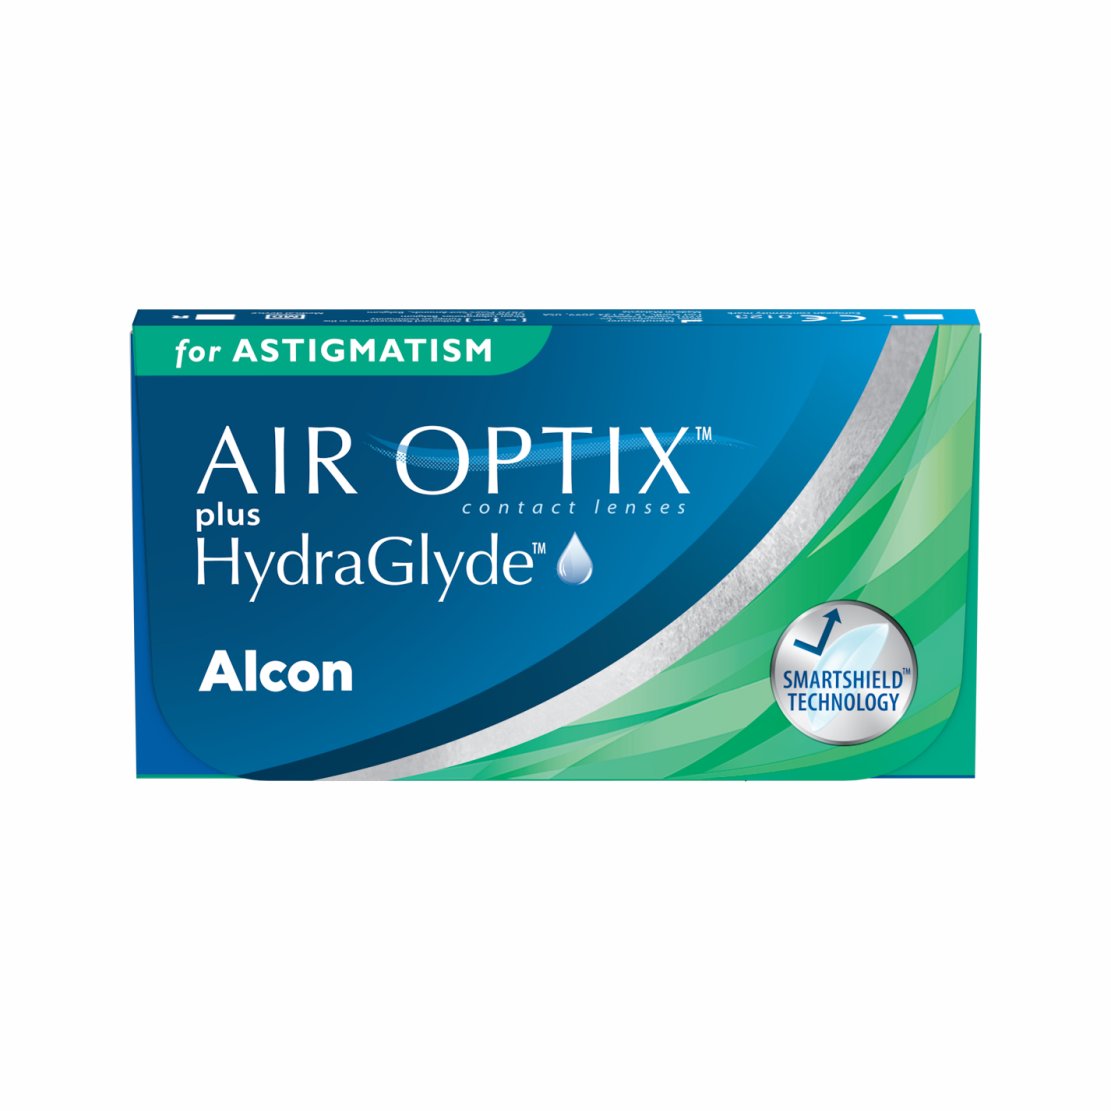 AIR OPTIX plus HydraGlyde for Astigmatism, Alcon